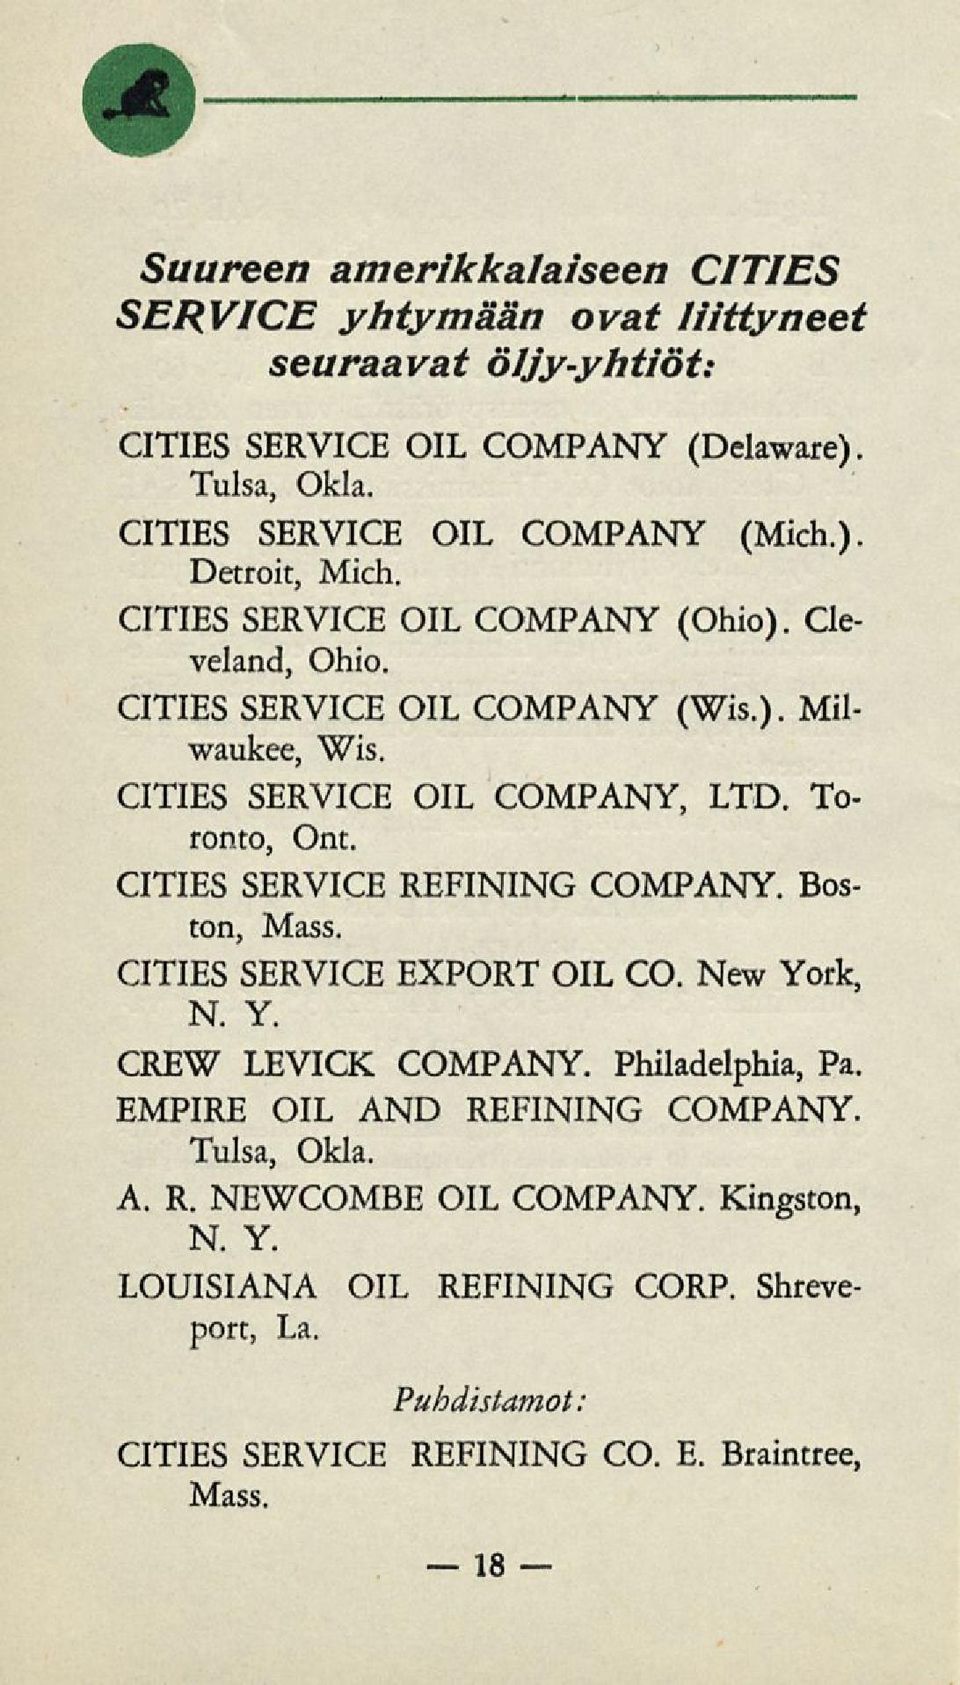 CITIES SERVICE OIL COMPANY, LTD. Toronto, Ont. CITIES SERVICE REFINING COMPANY. Boston, Mass. CITIES SERVICE EXPORT OIL CO. New York, N. Y. CREW LEVICK COMPANY.